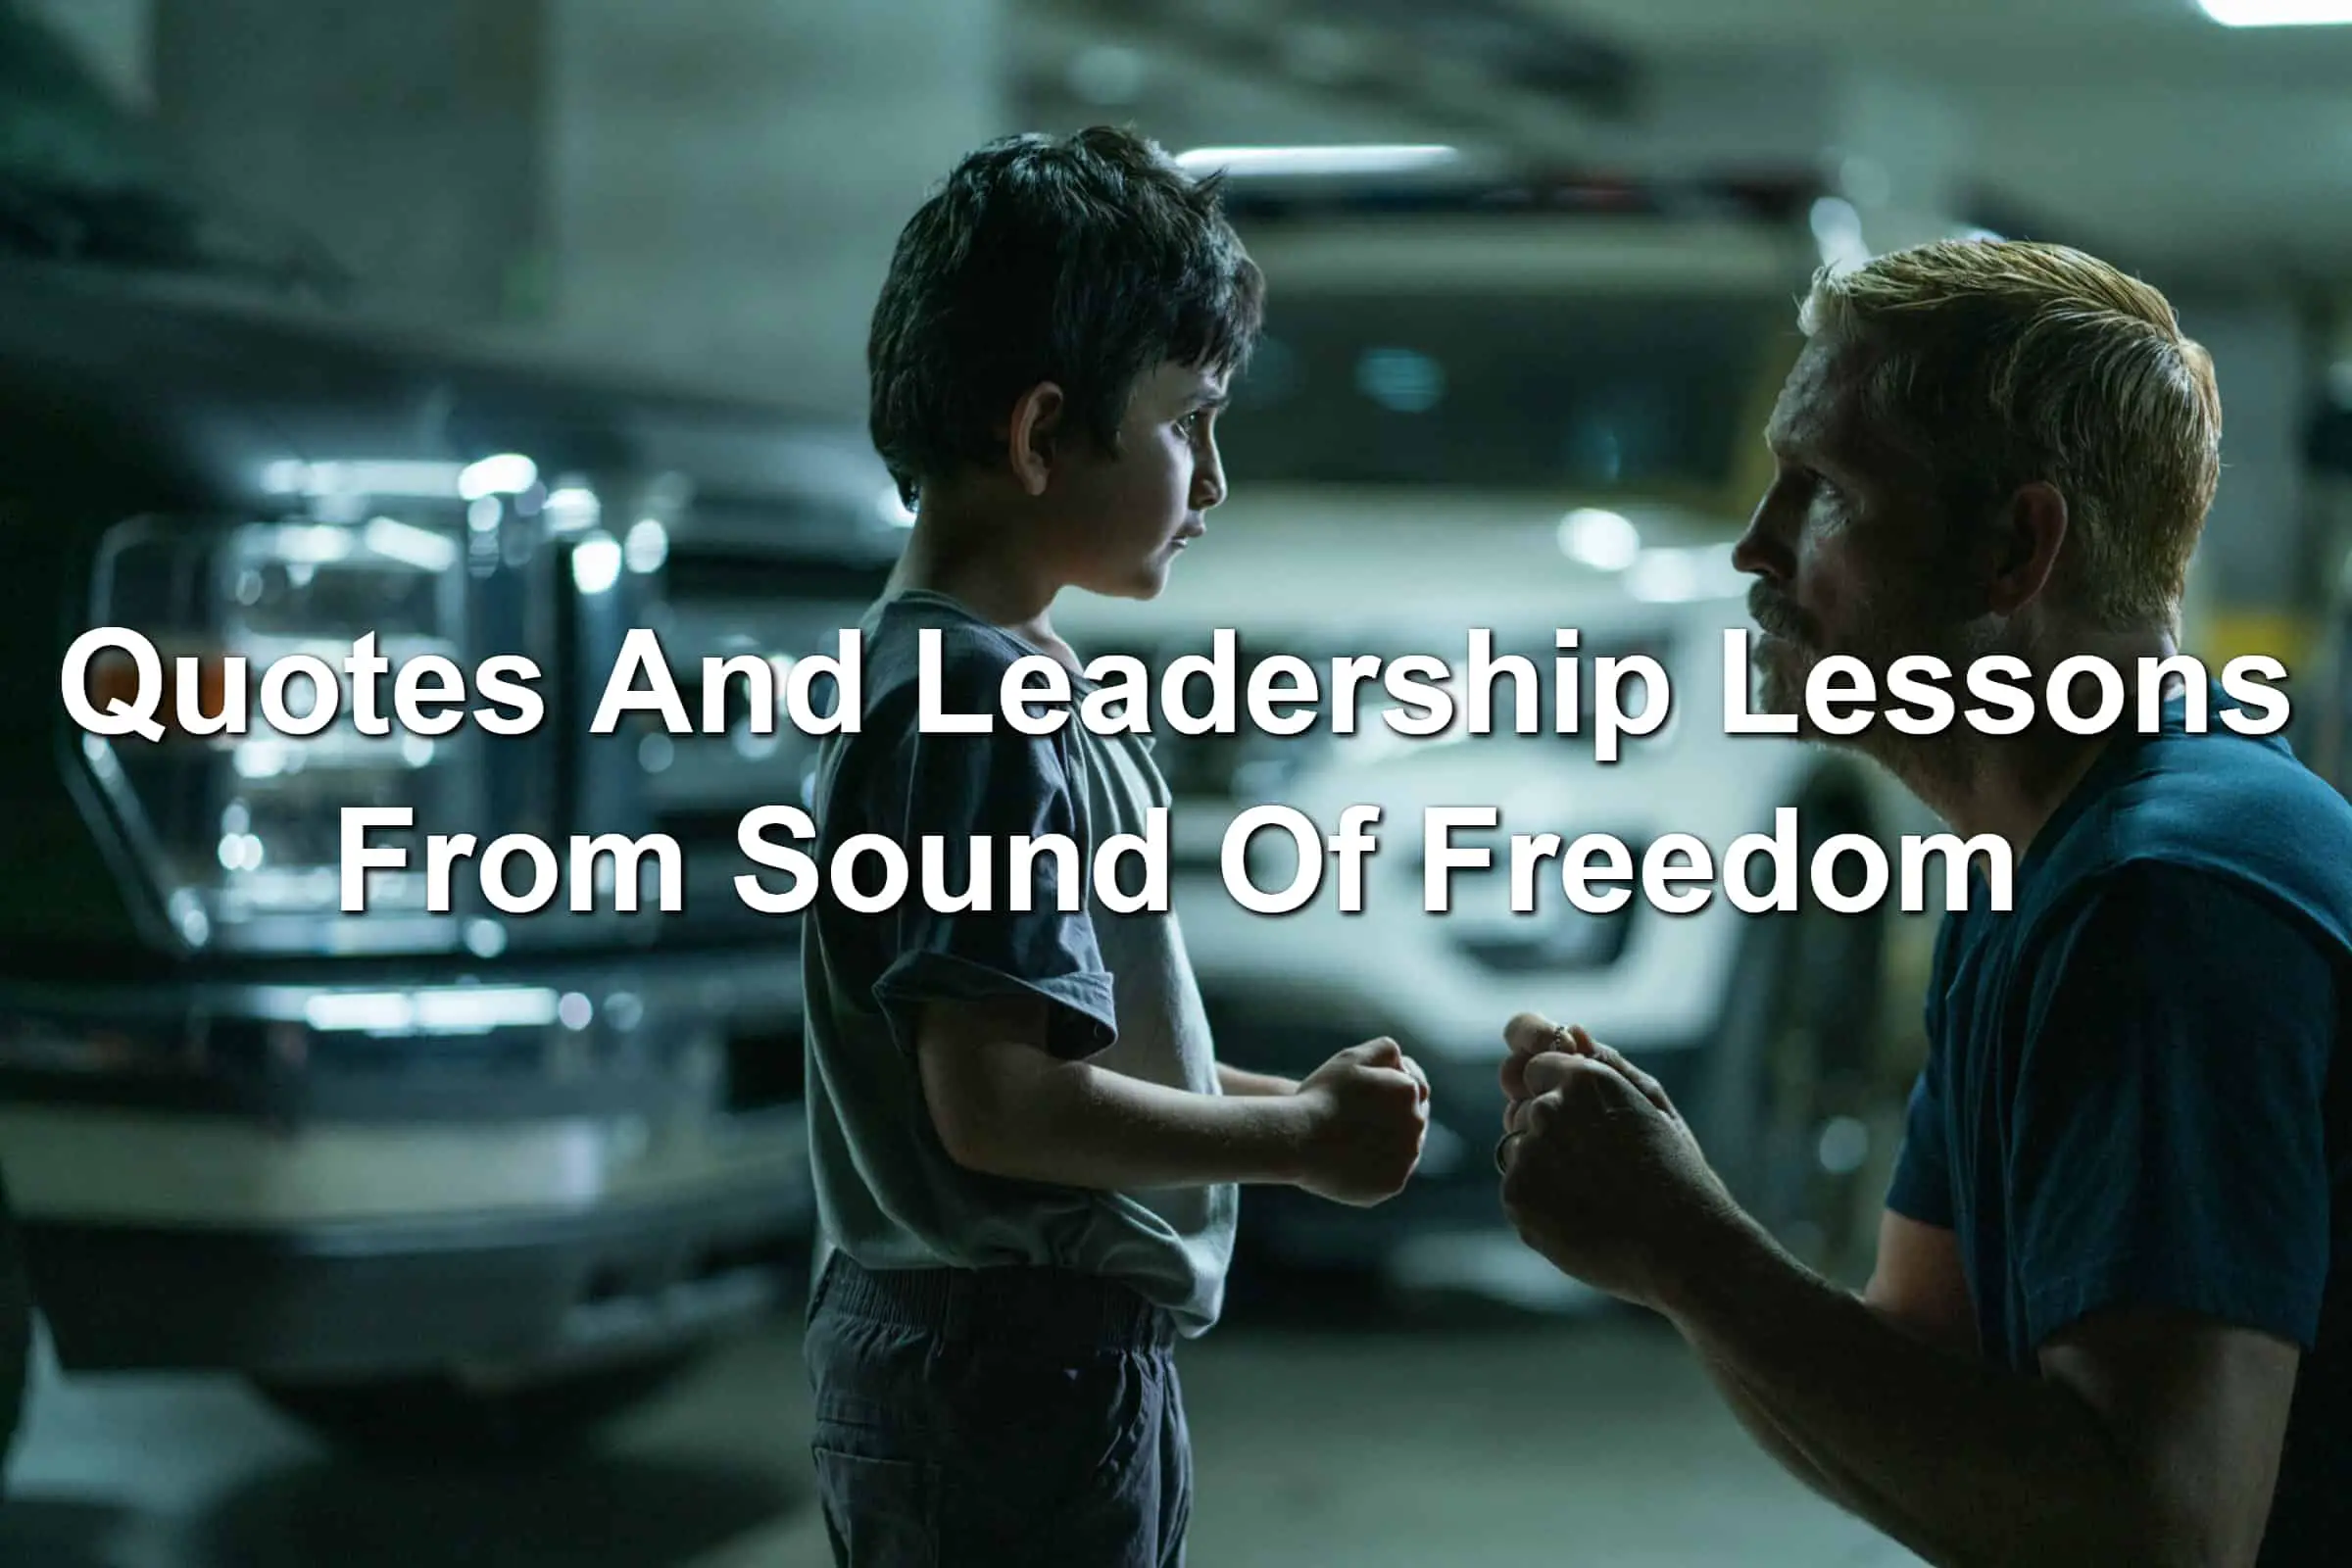 Jim Caviezel and Lucás Ávila in the movie Sound Of Freedom